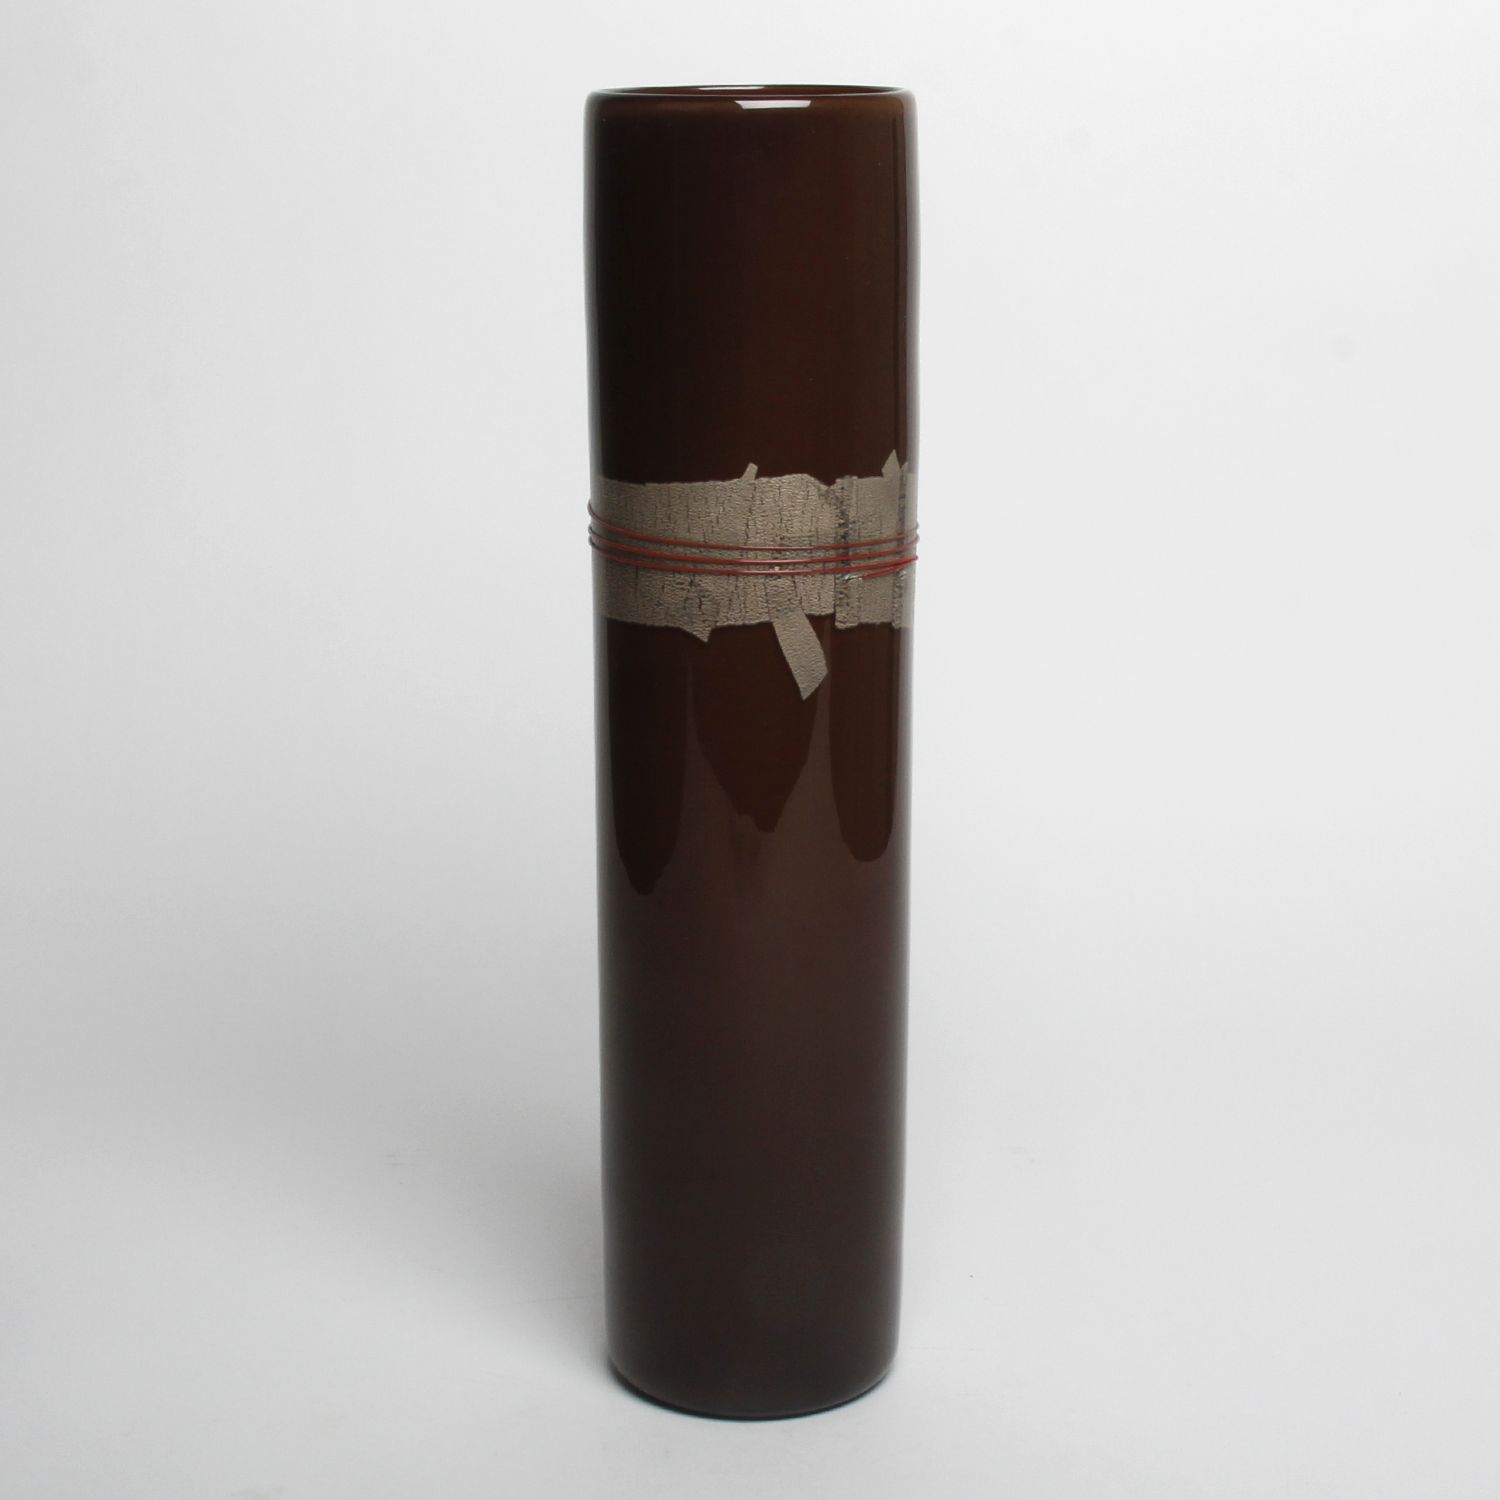 Pinzette: Large Obi Cylinder Product Image 2 of 5